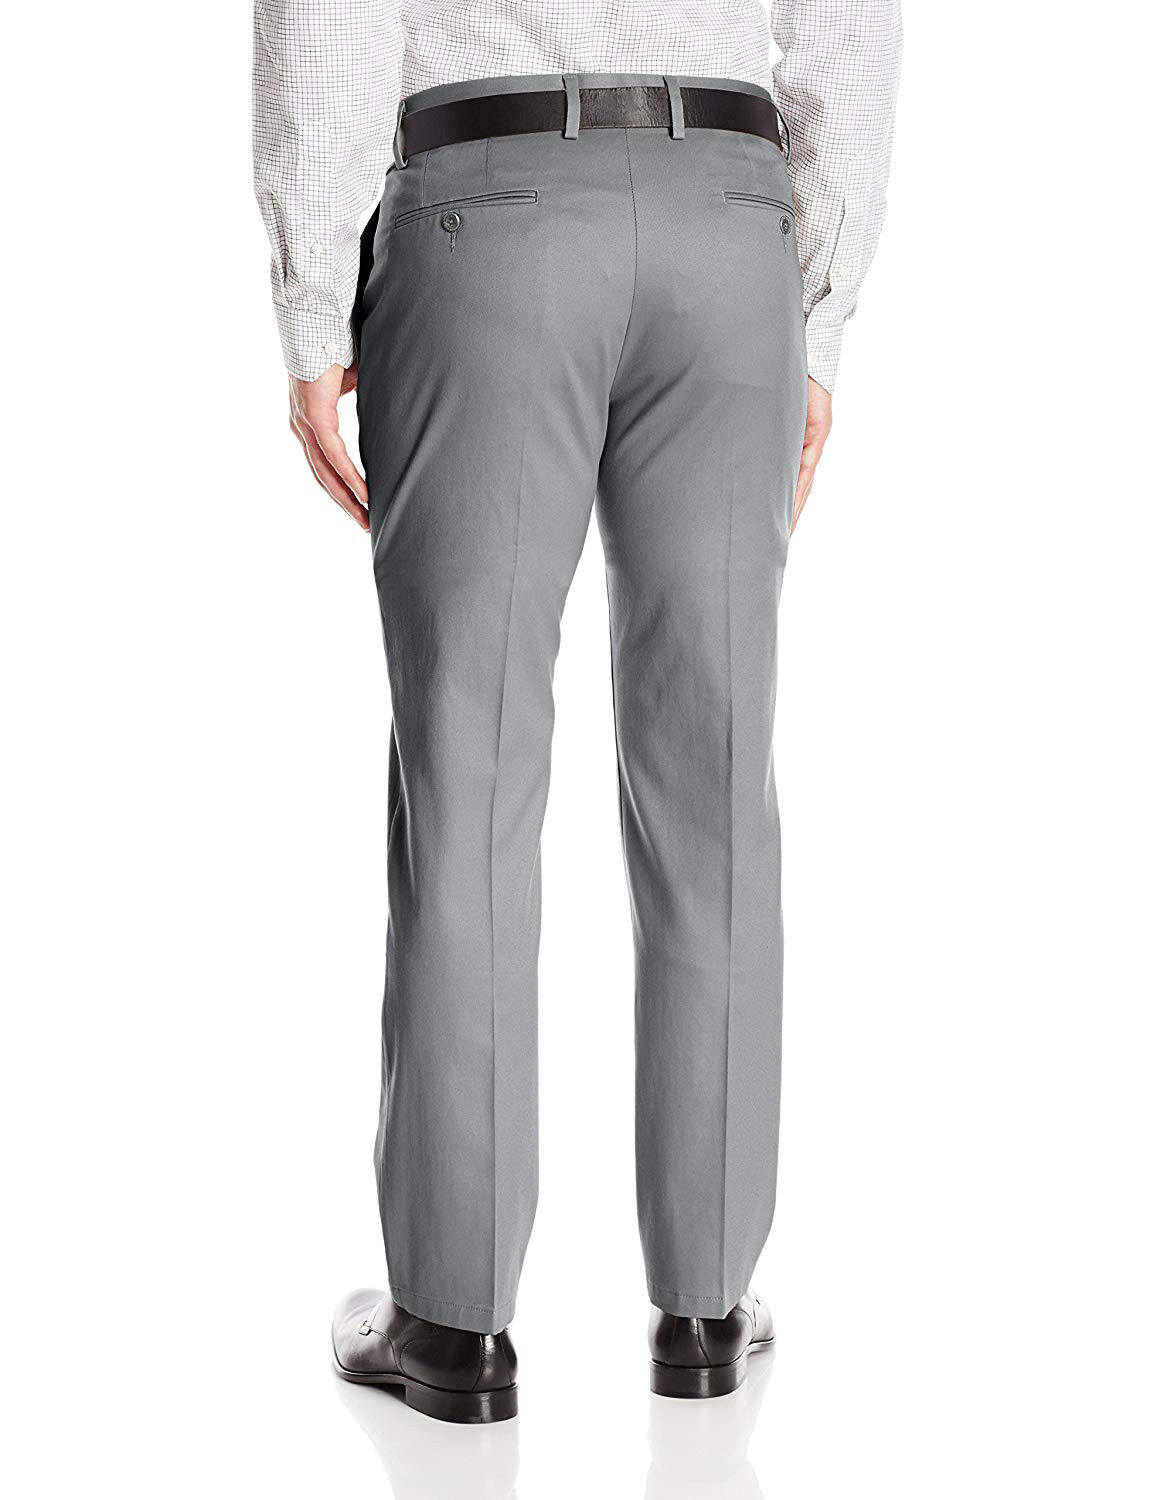 vkwear Men's Formal Slim Fit Slacks Trousers Flat Front Business Dress ...